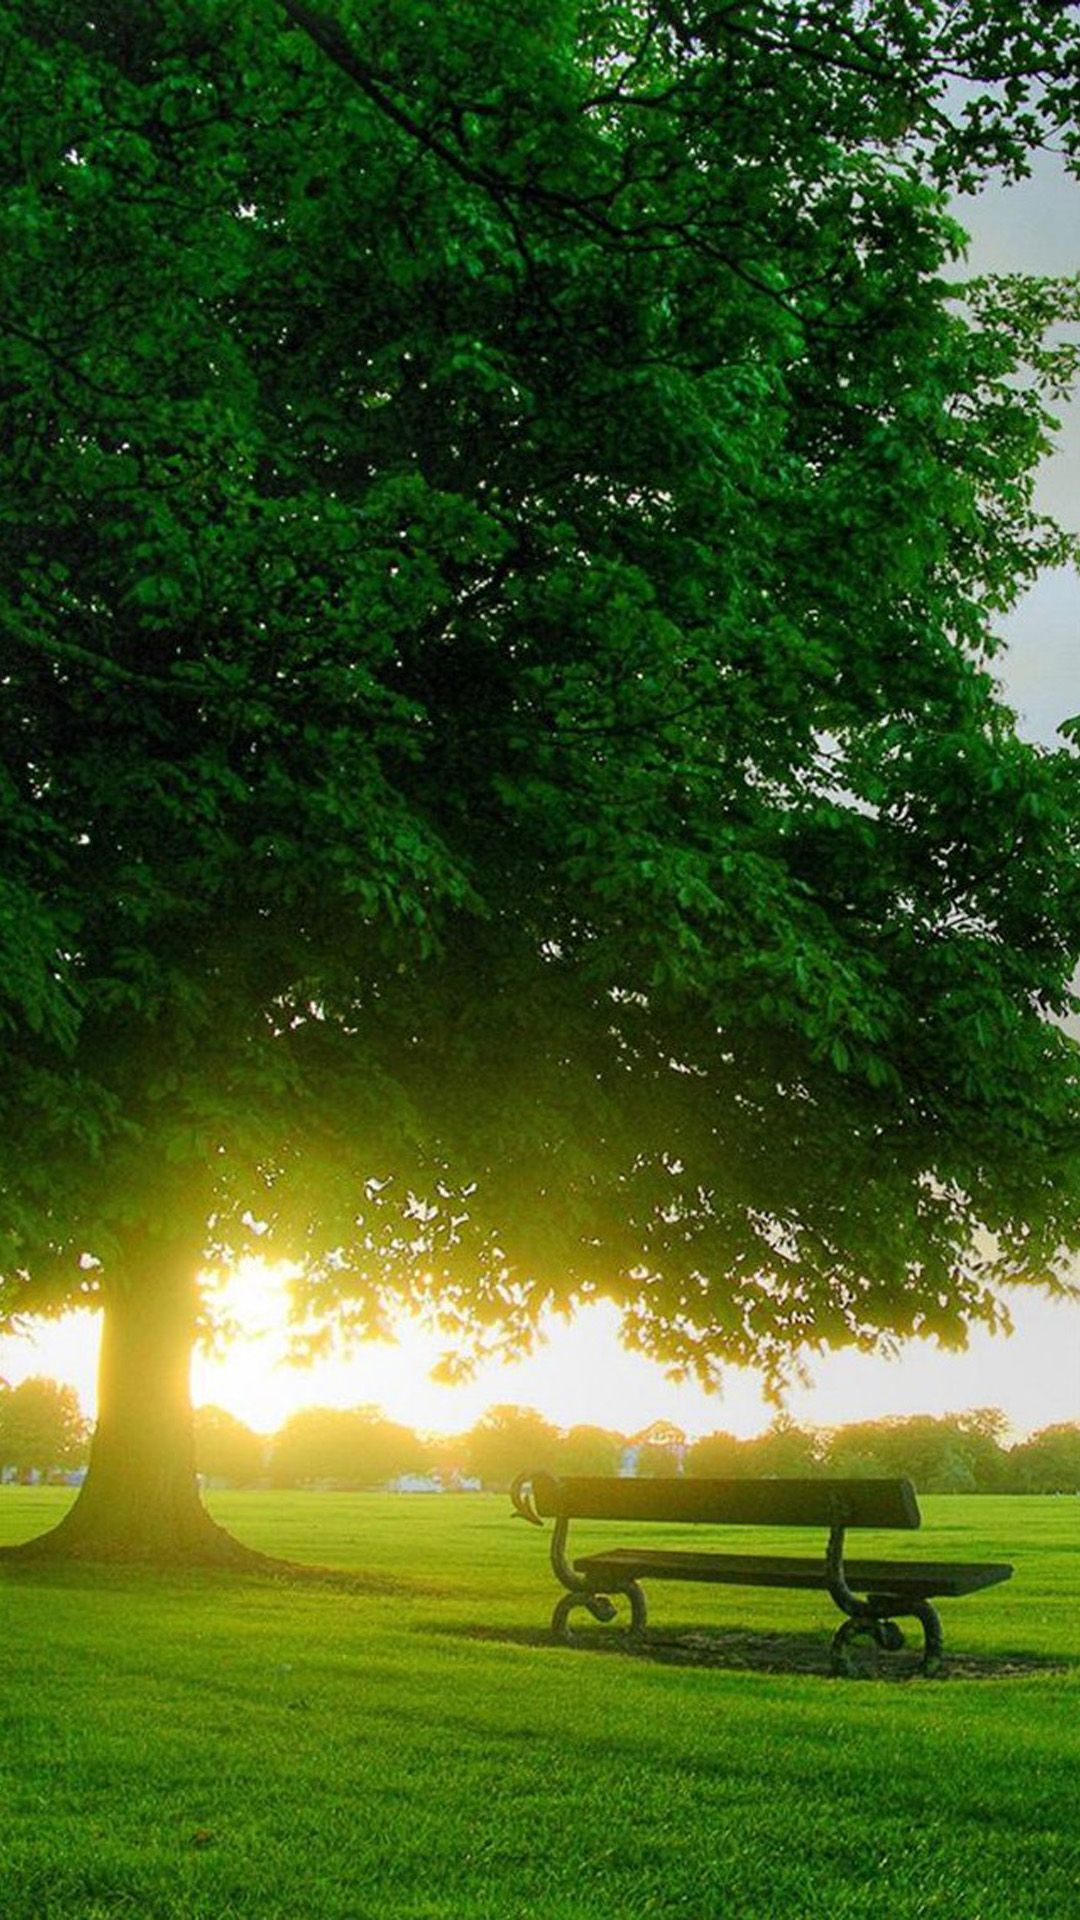 Sunshine Bench Under Big Tree iPhone 8 Wallpaper Free Download